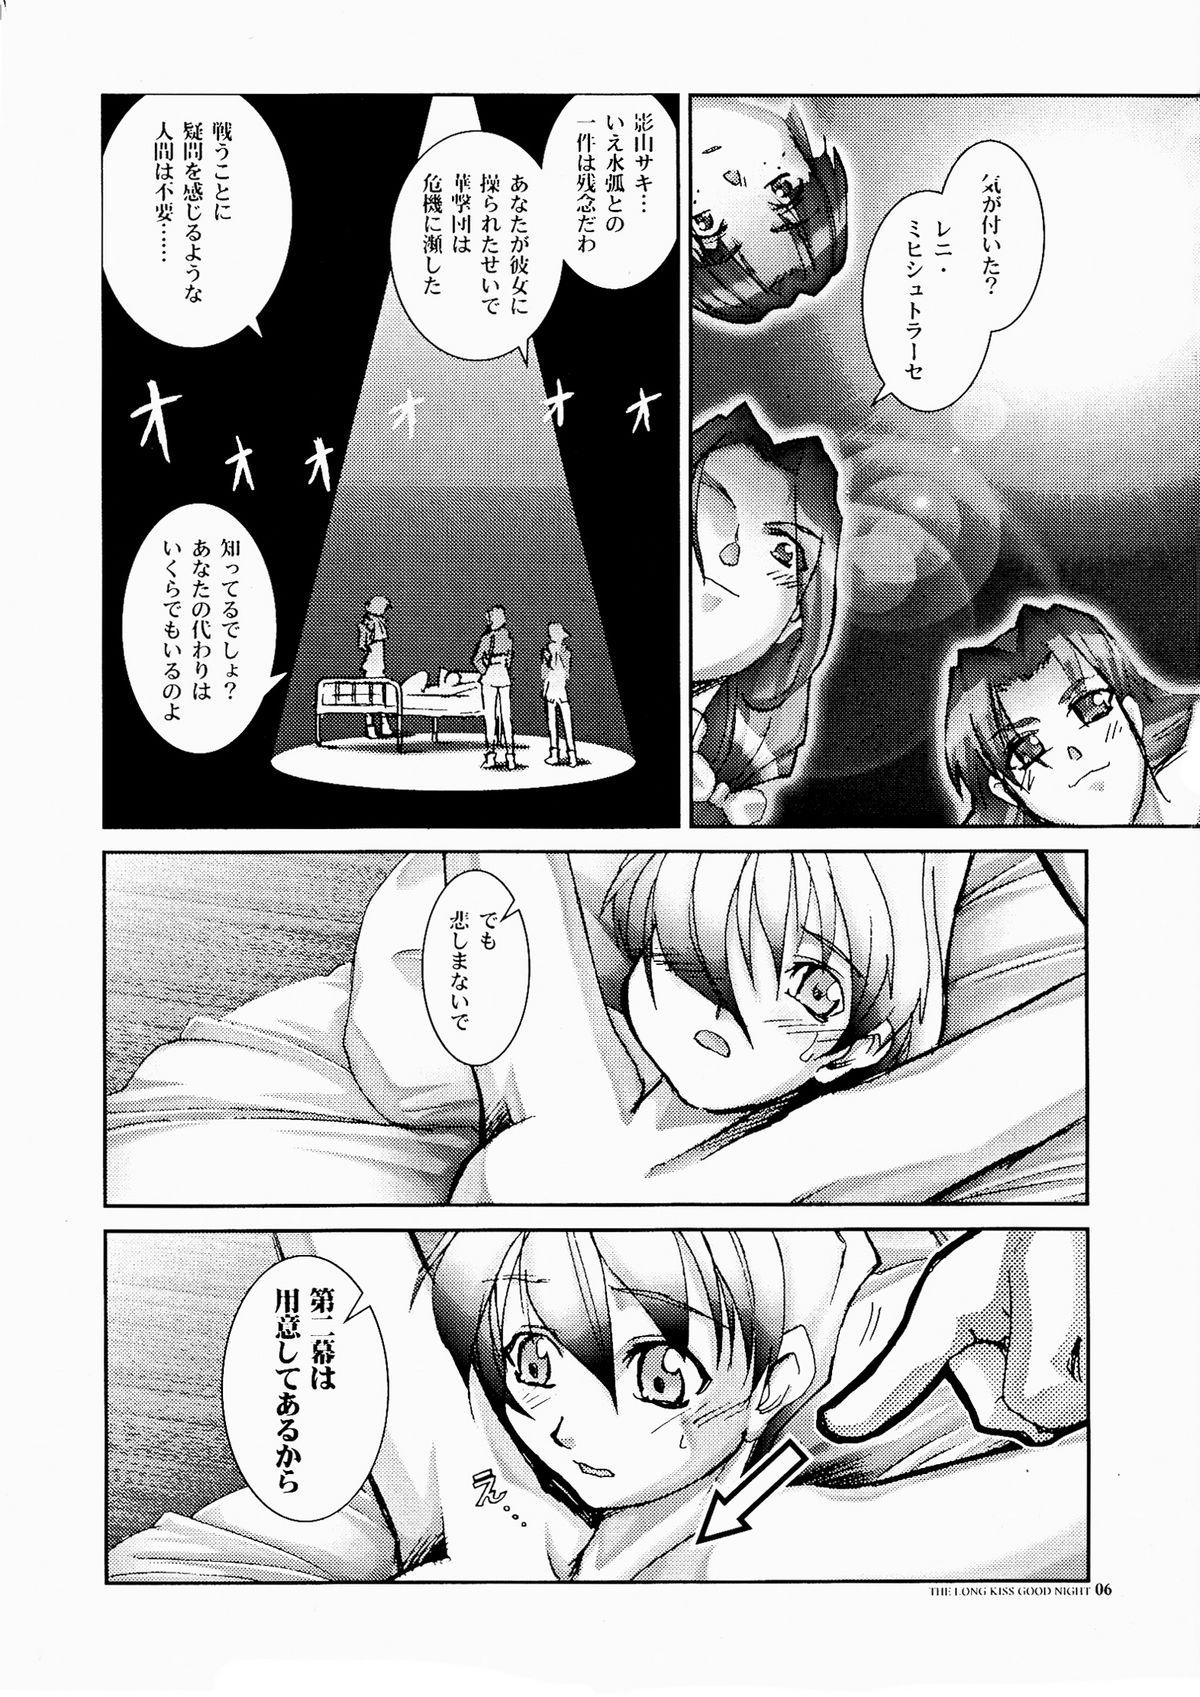 Realitykings PG #06 - THE LONG KISS GOOD NIGHT - Sakura taisen Teen - Page 6